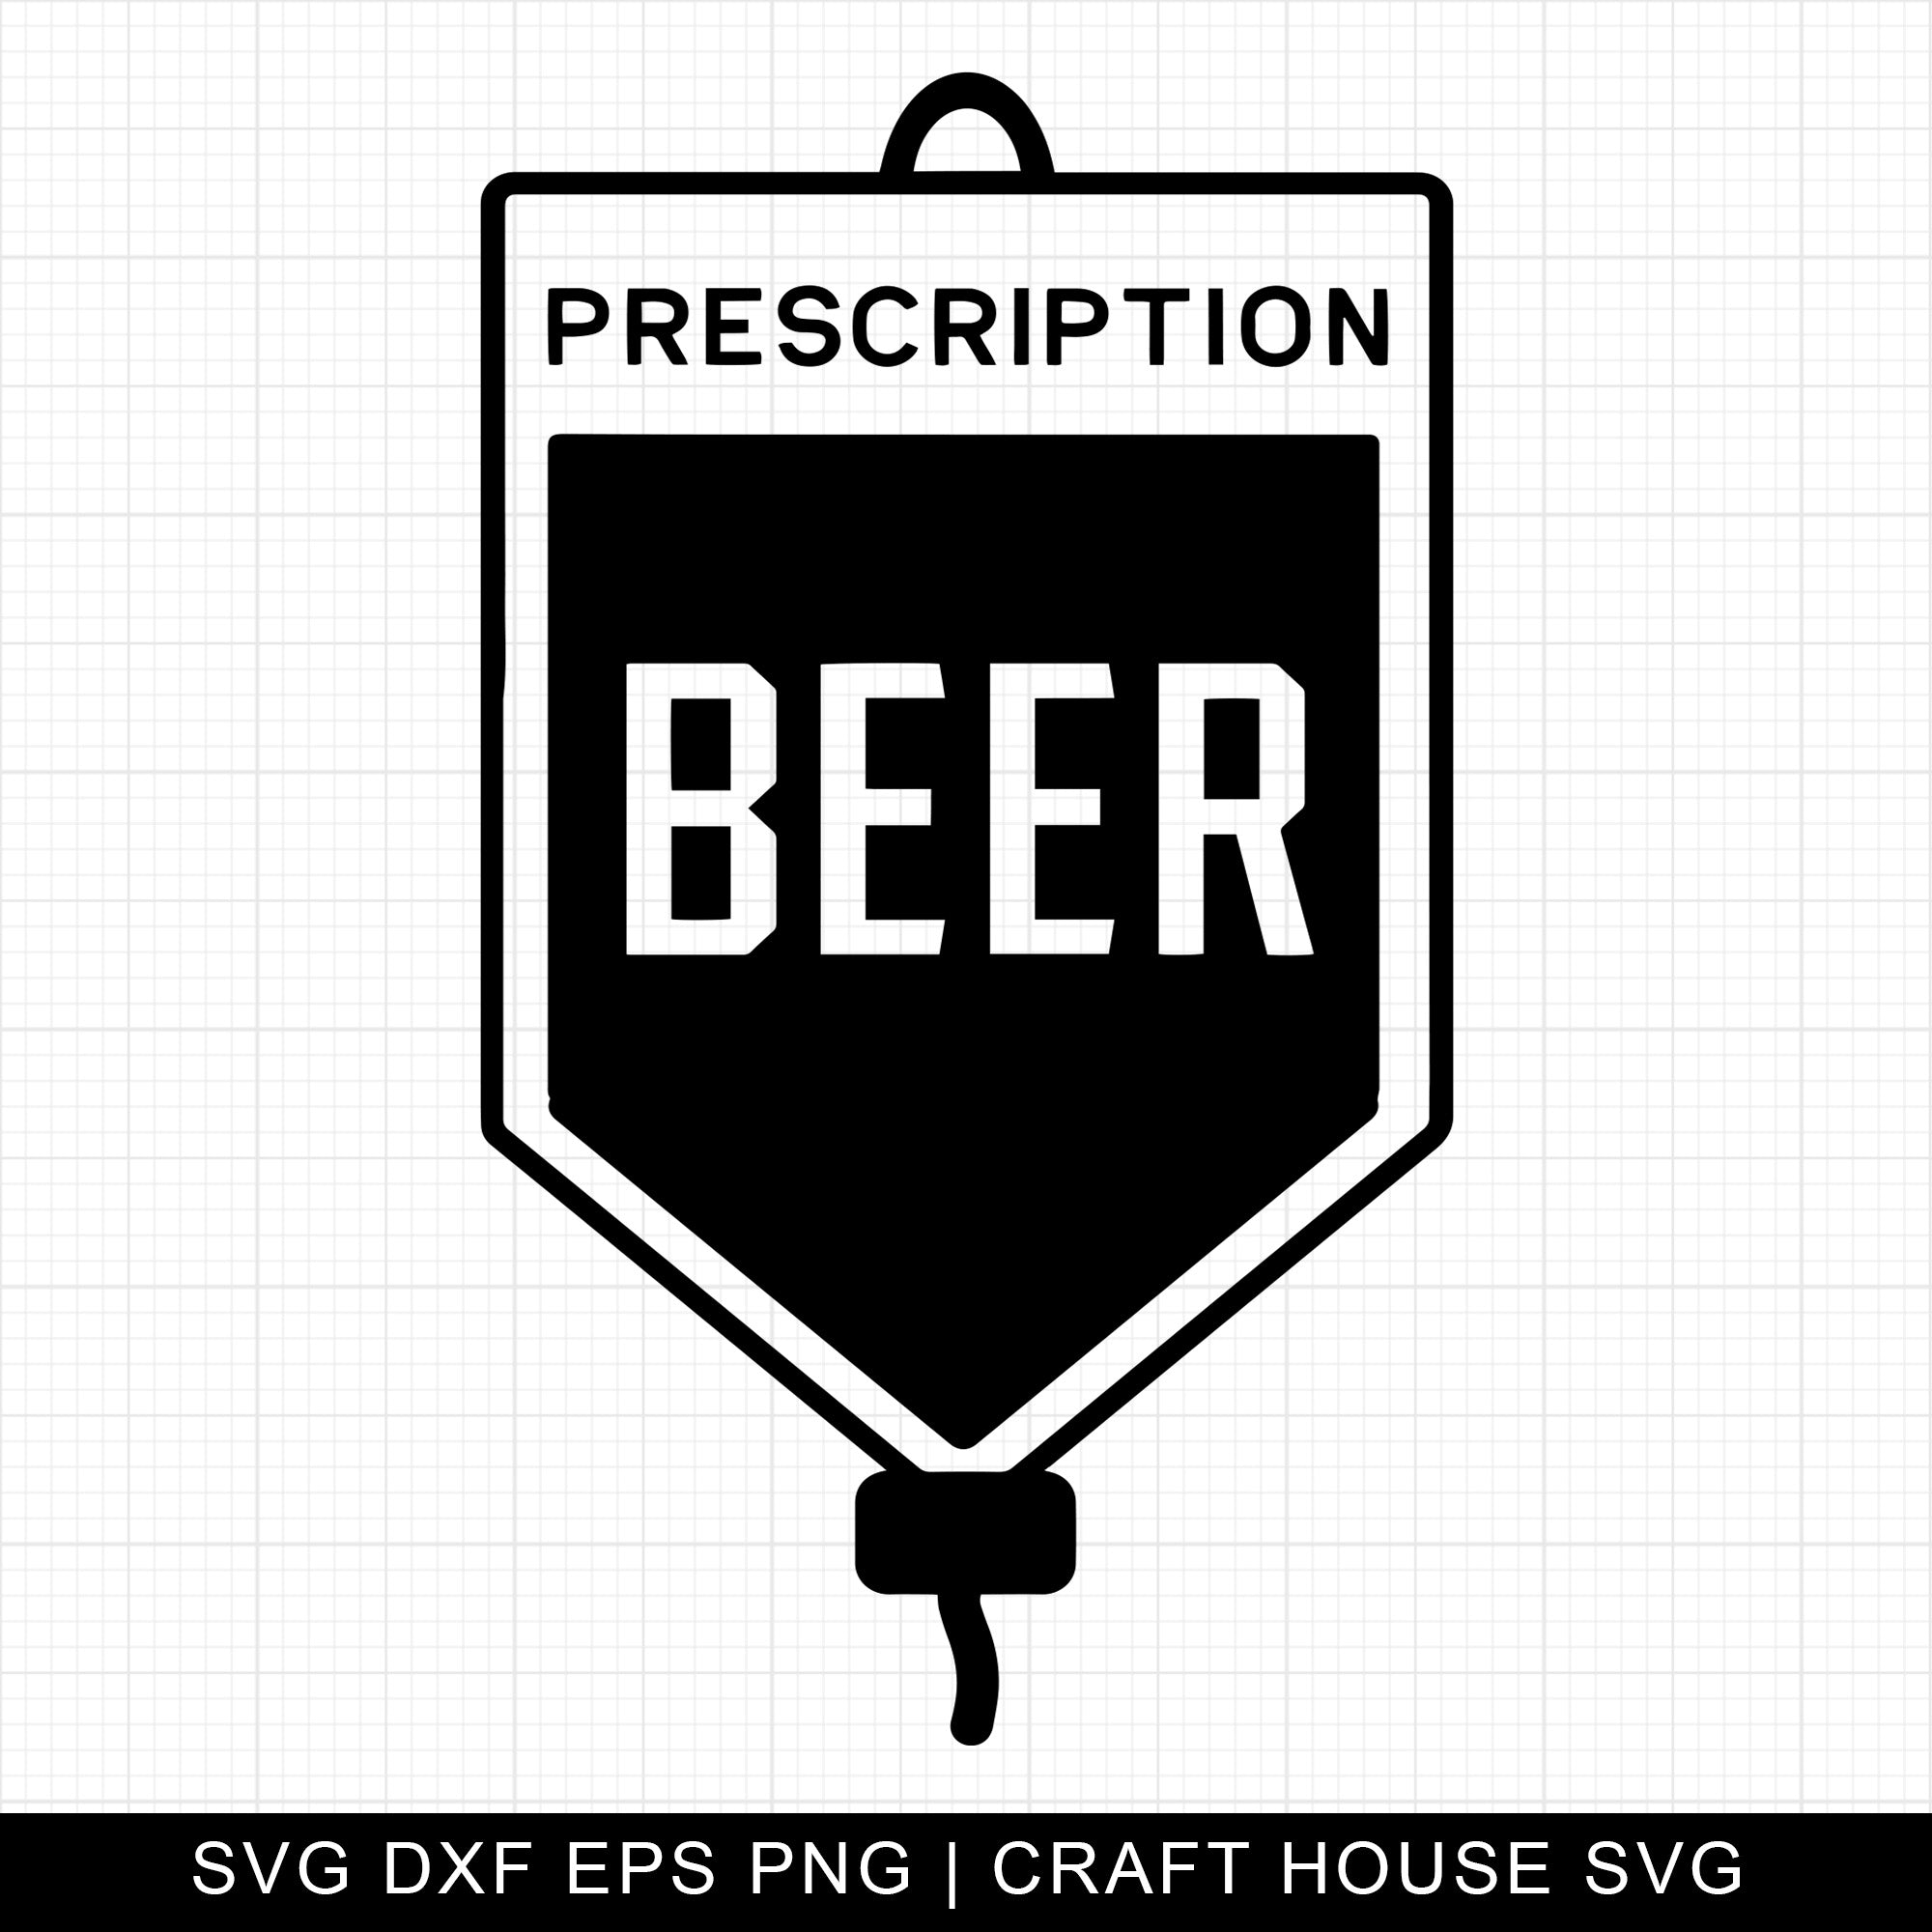 Prescription beer SVG | M4F17